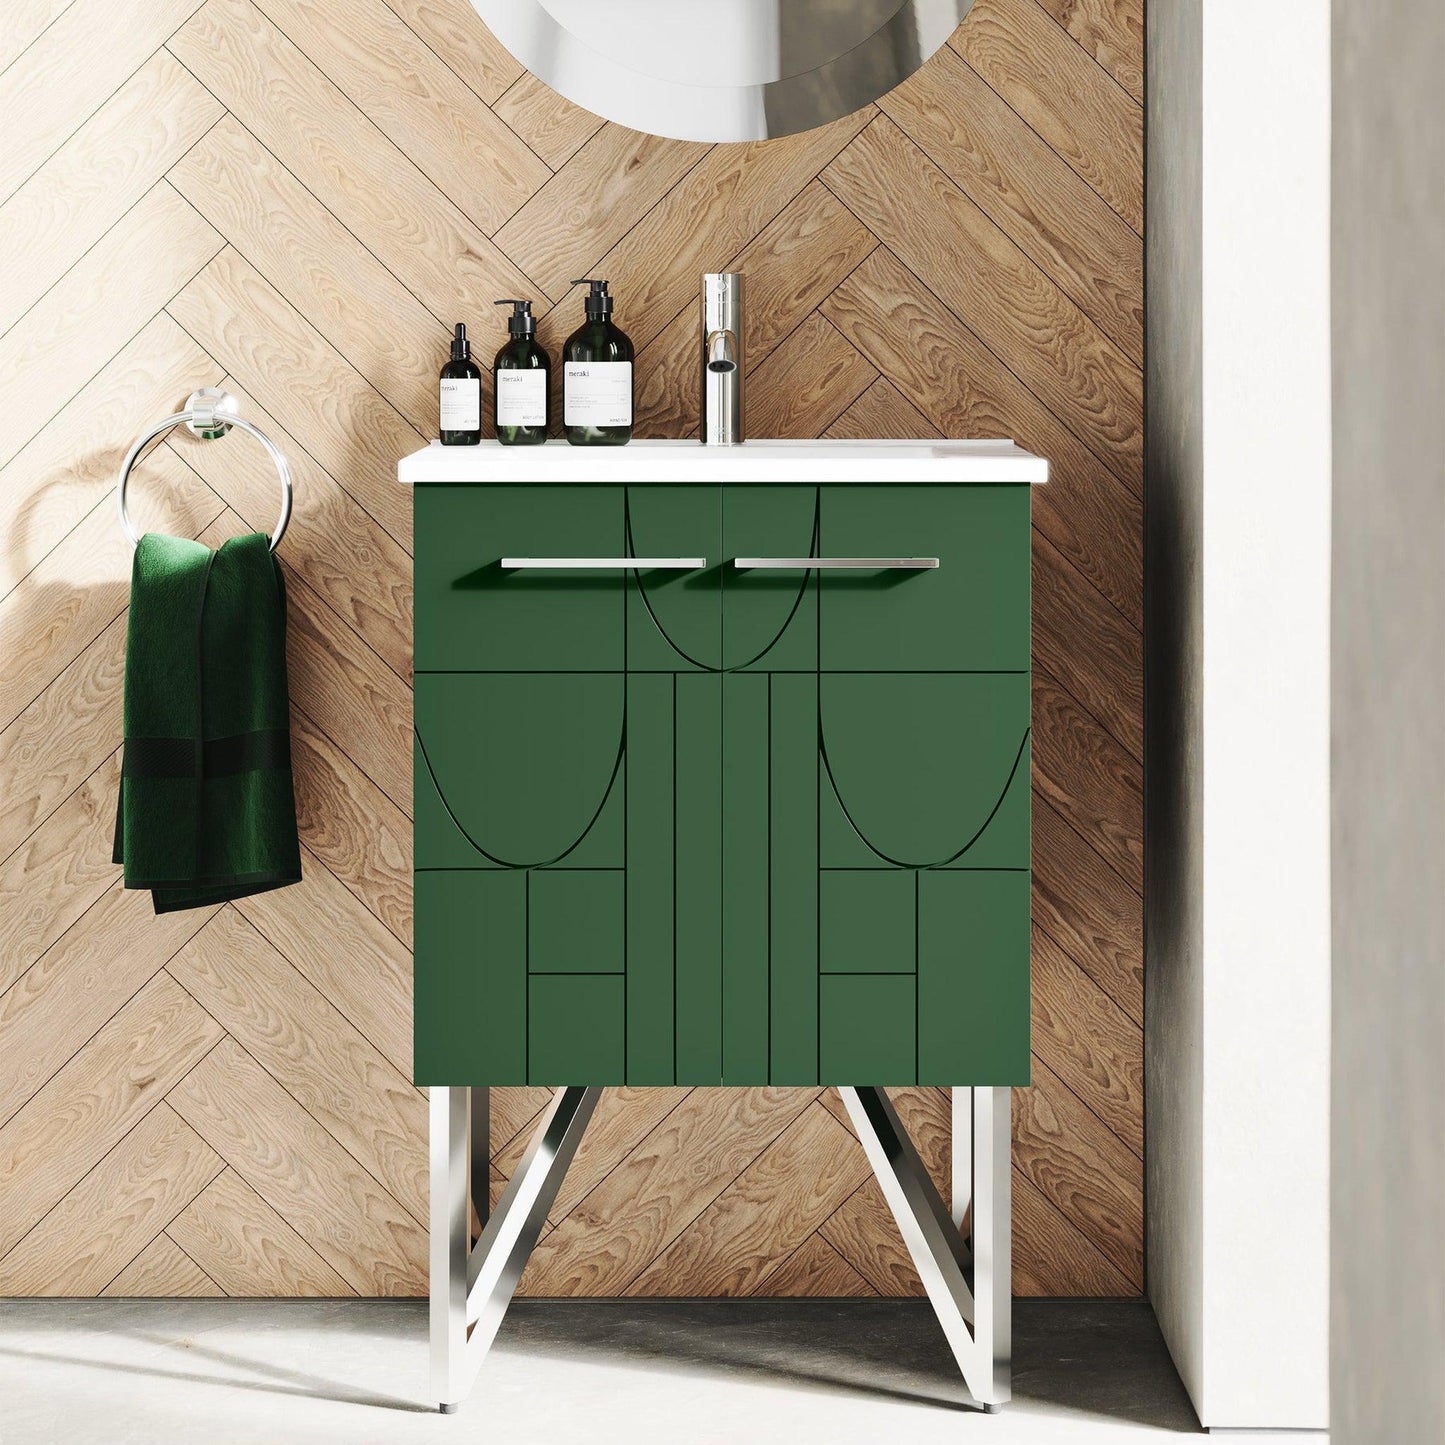 Swiss Madison Annecy 24" x 35" Freestanding Atlas Green Bathroom Vanity With Ceramic Single Sink and Stainless Steel Metal Legs